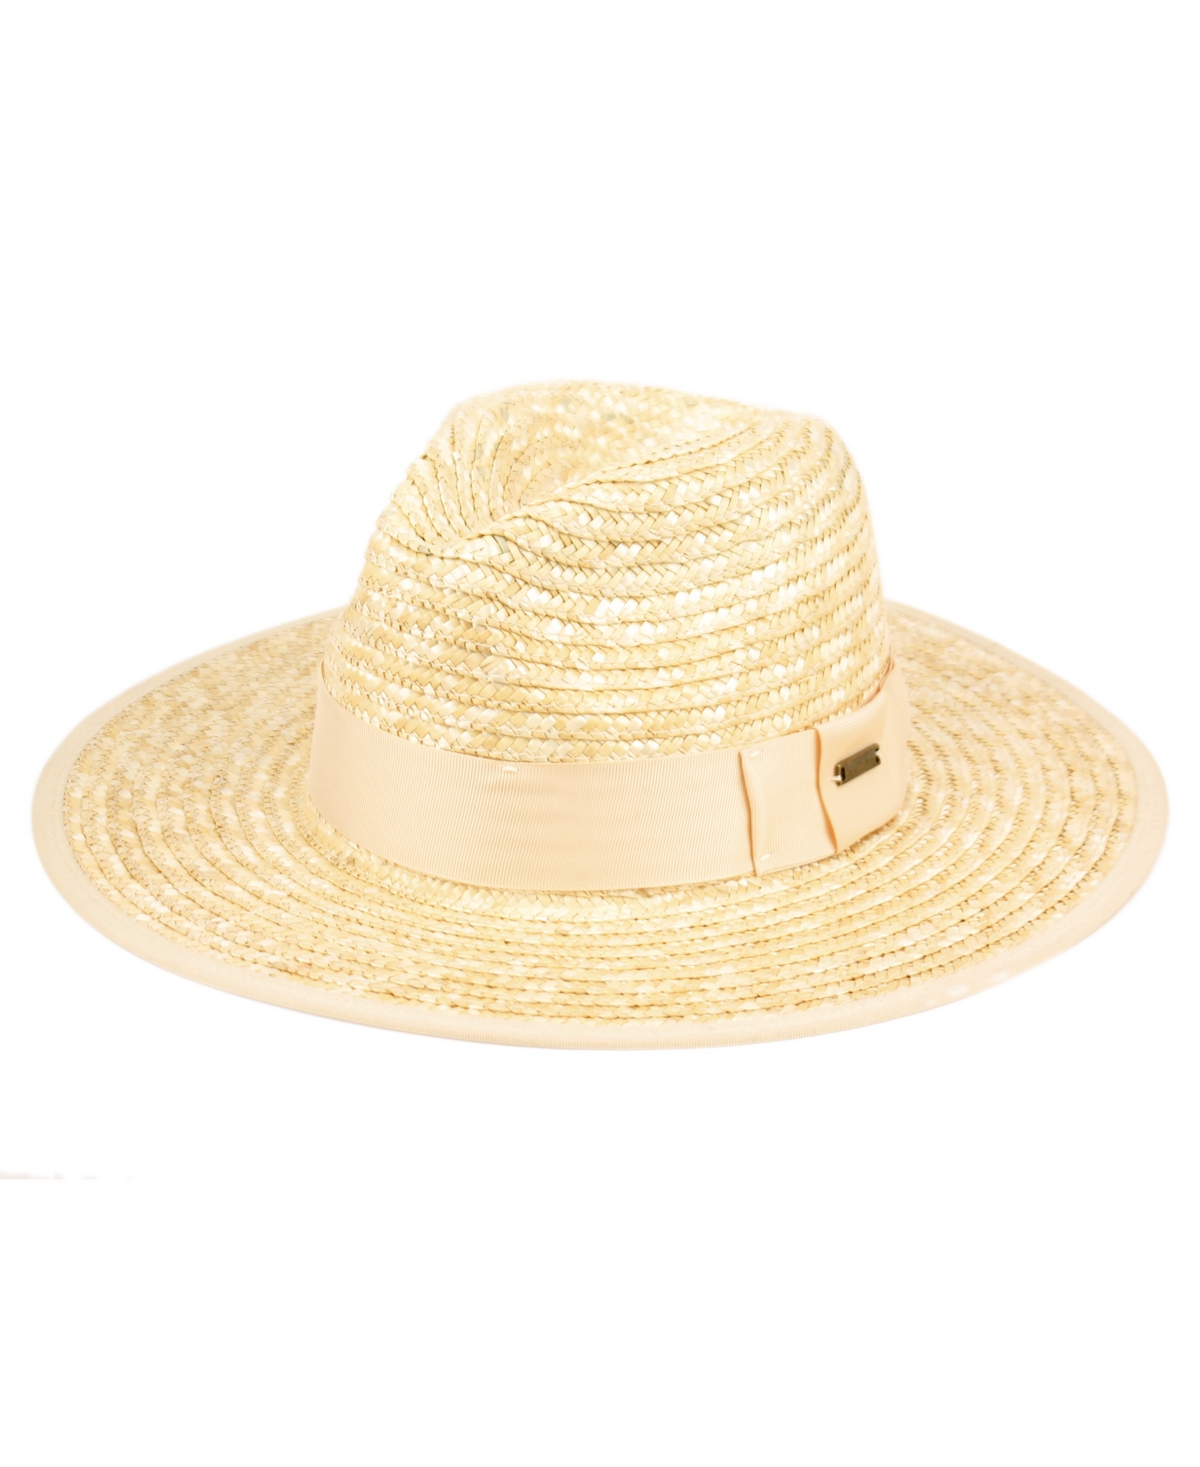 Straw Panama Fedora Hat - Natural